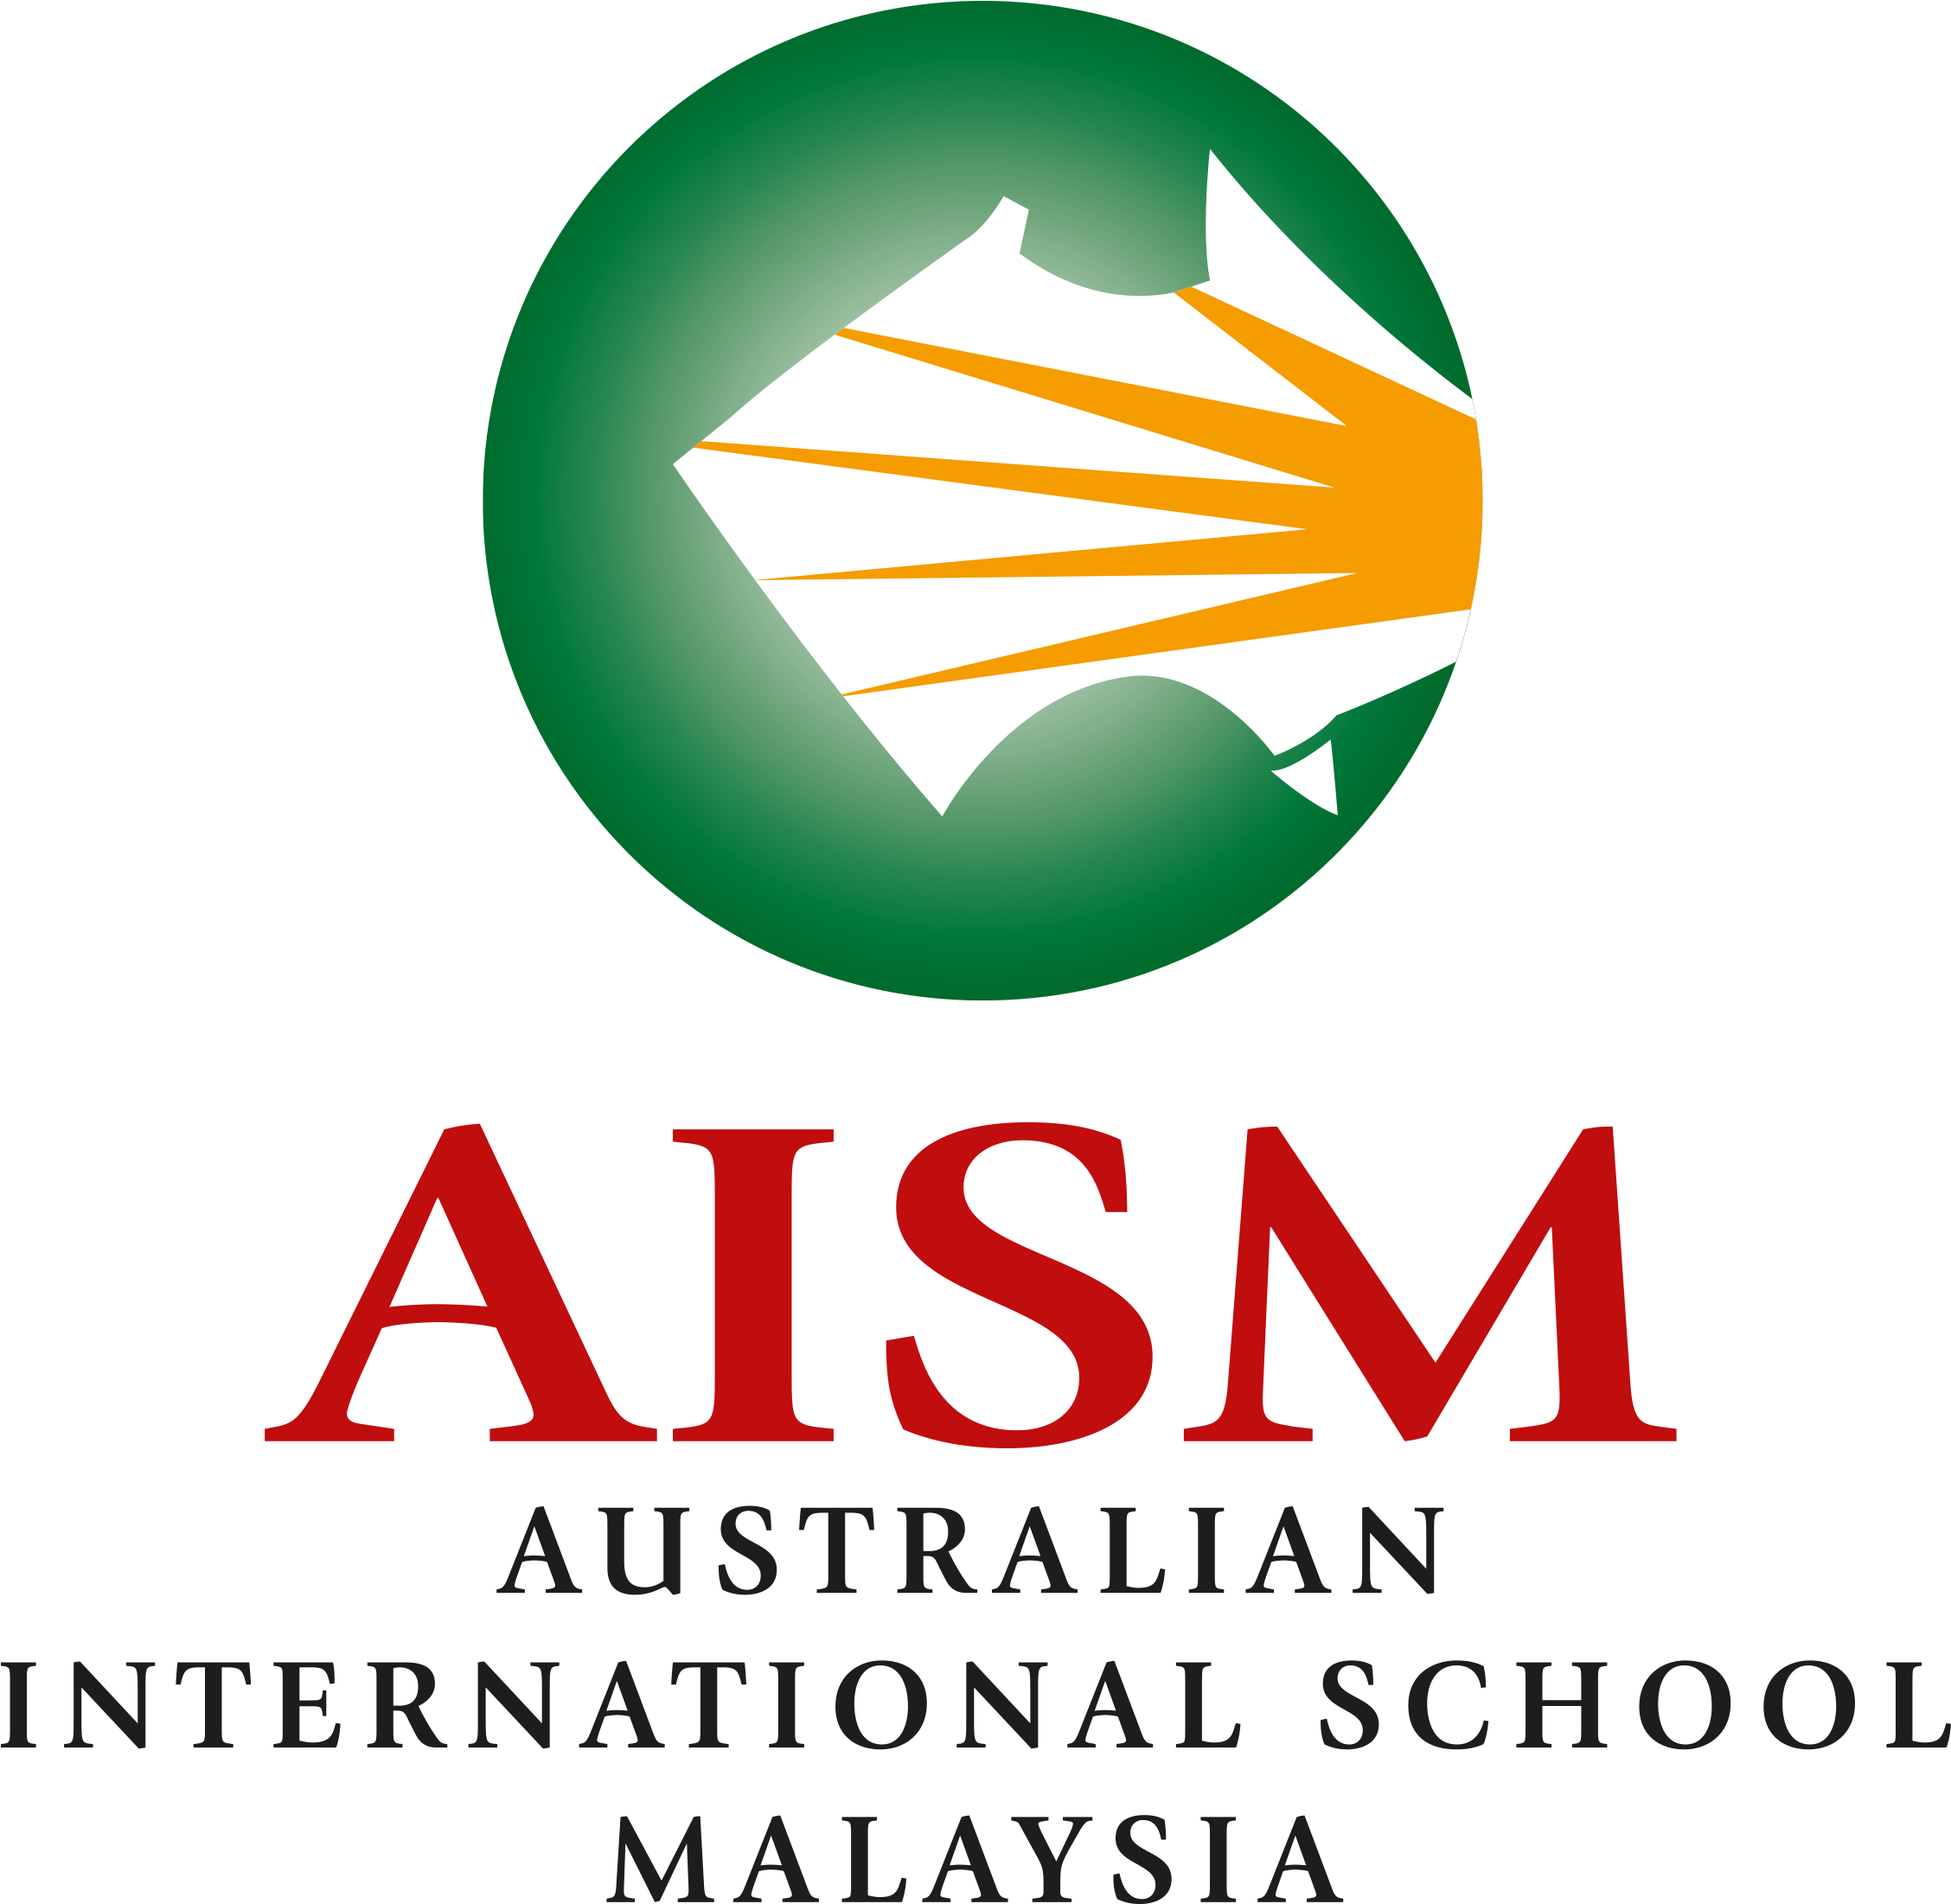 Institutions Scholarships2u Rh Scholarships2u Com Graphic - Australian International School, Malaysia (2370x2270)